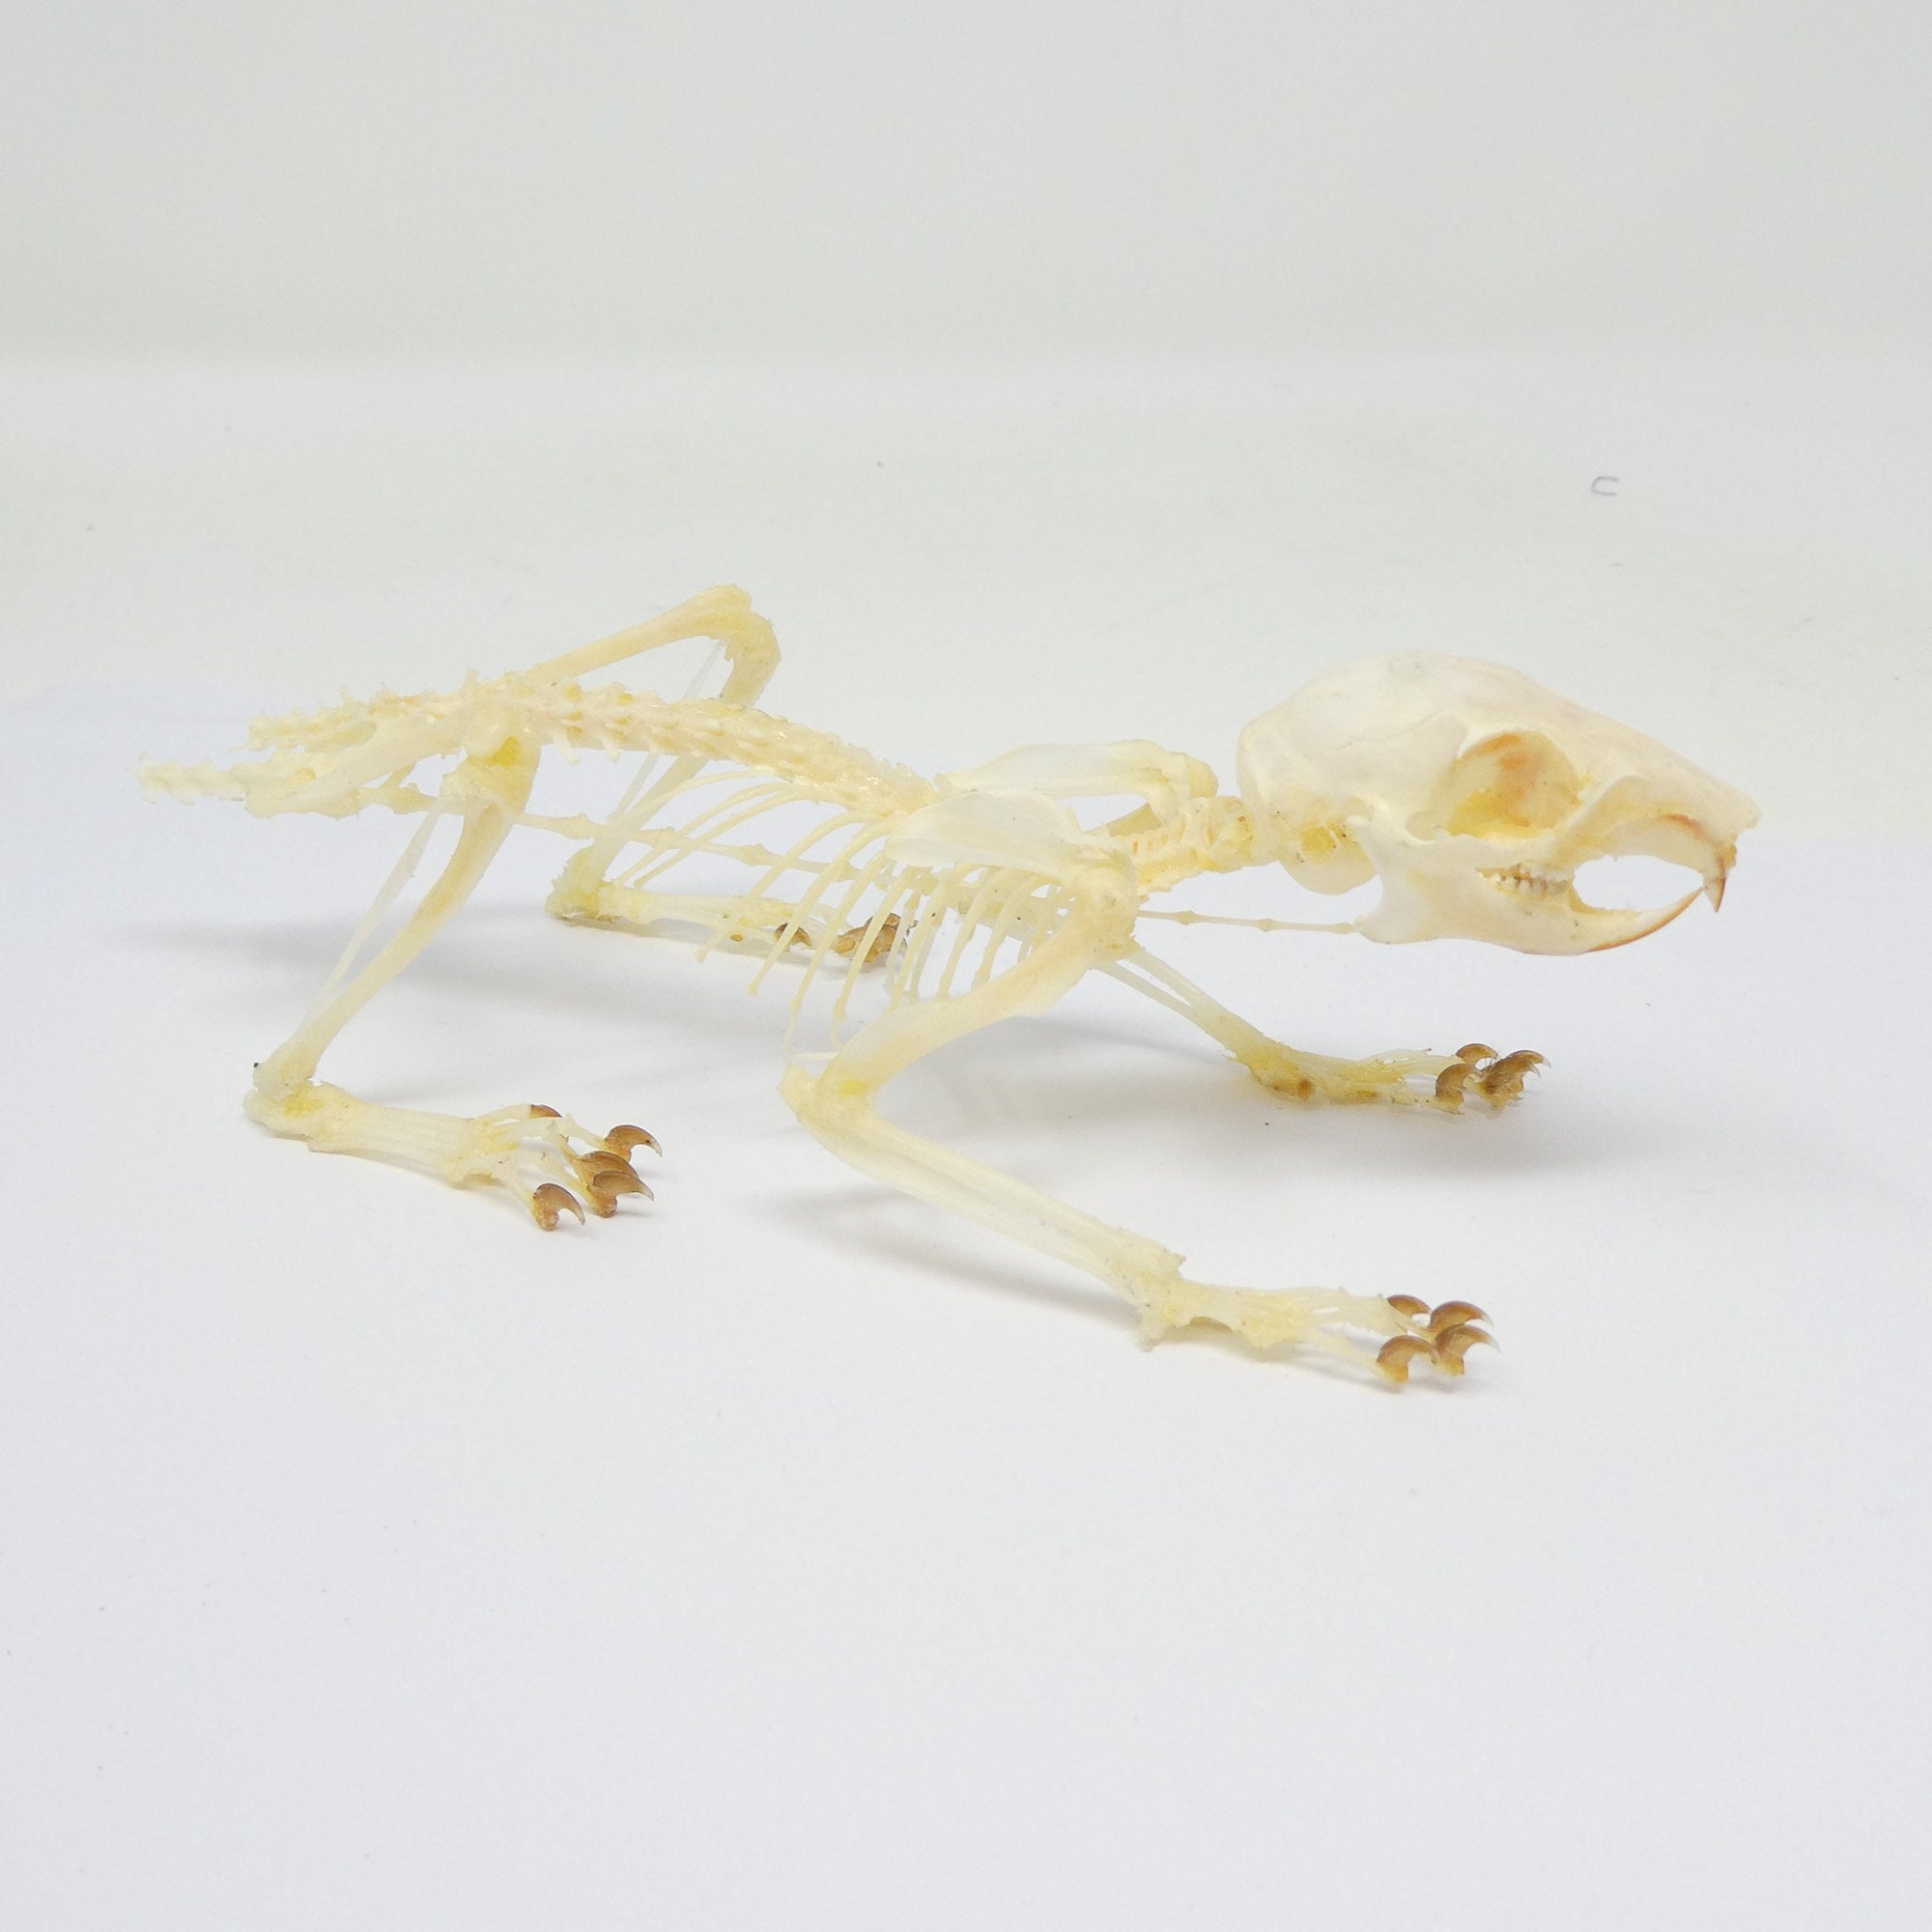 Oriental Squirrel Skeleton (Callosciurus notatus) | A1 Specimen Taxidermy Ideal for Framing, Collecting, Gift